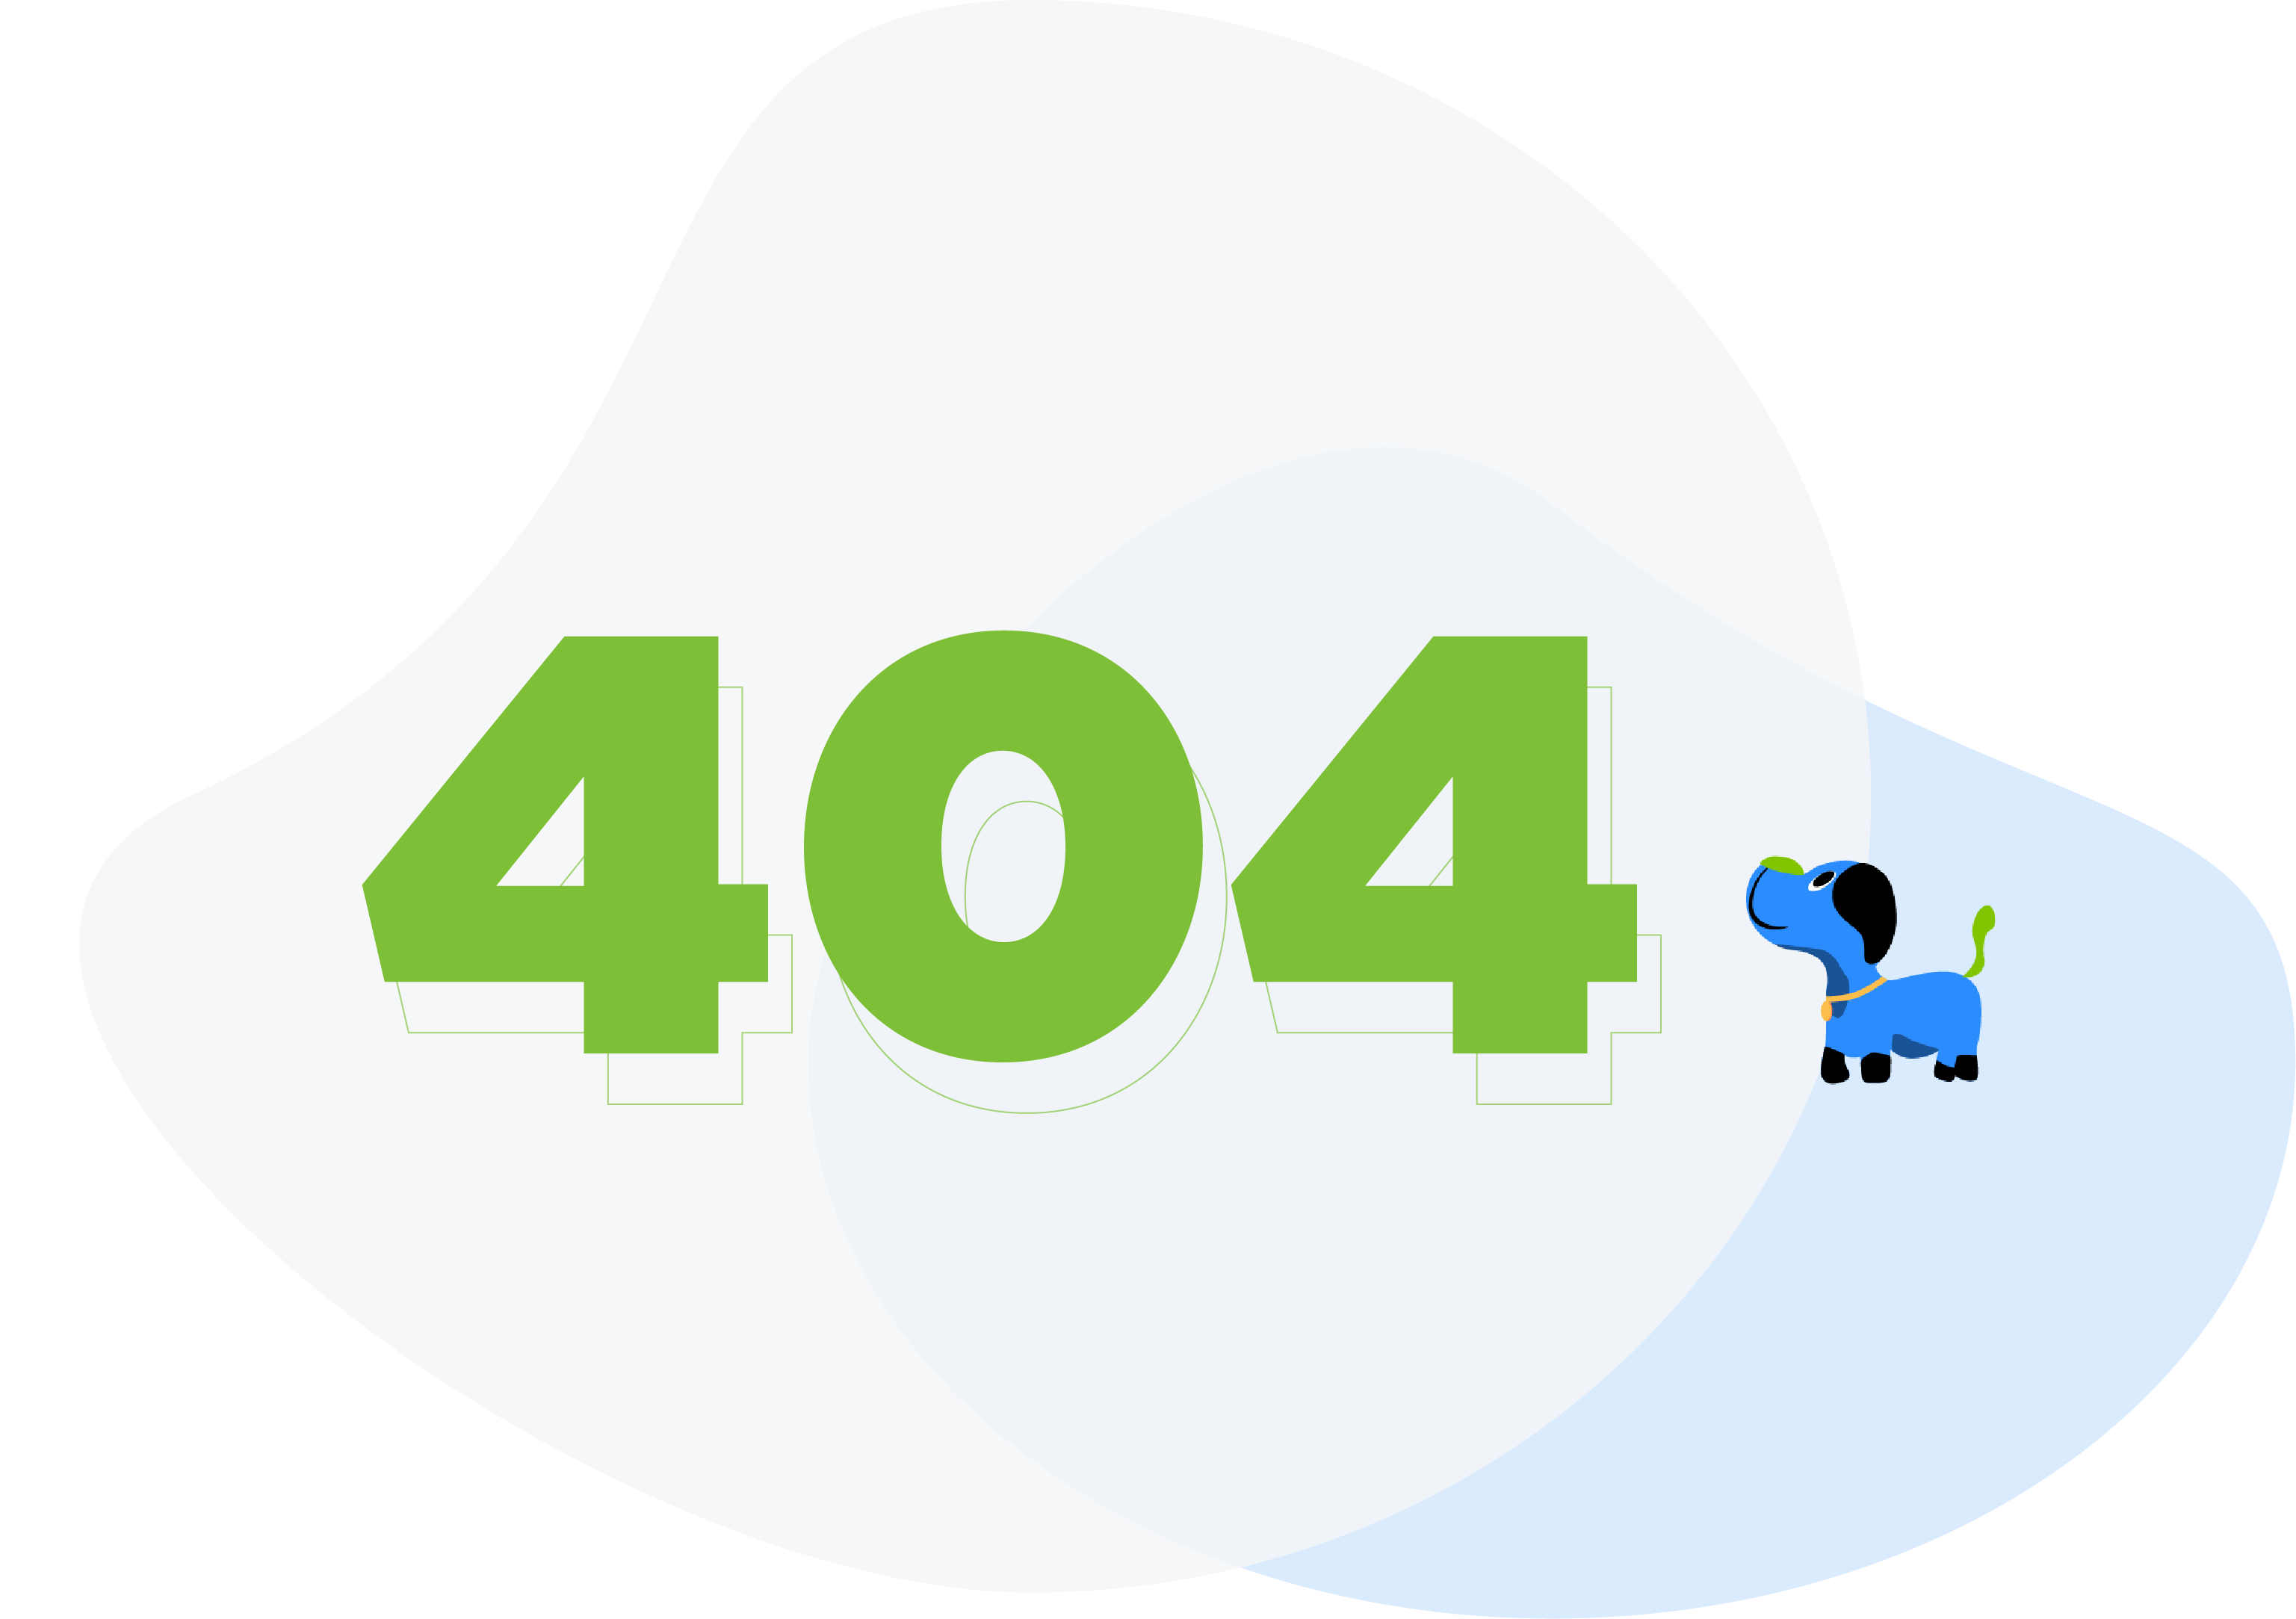 404 image with Brandmovers' dog Bloo